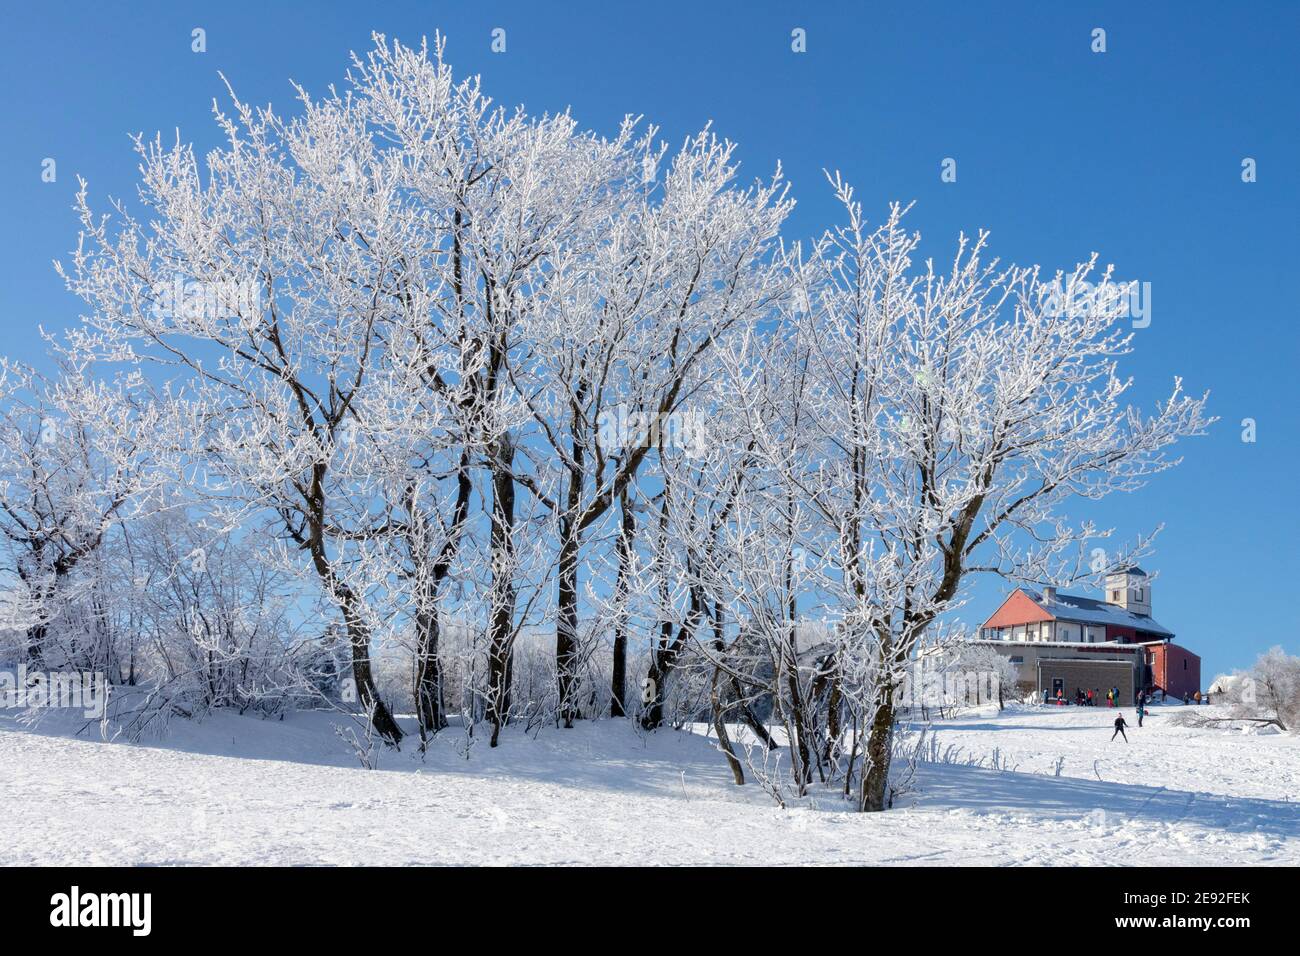 Komari Vizka Erzgebirge Tschechische Republik Winterschneebäume Tschechische Berge Winterszene Stockfoto